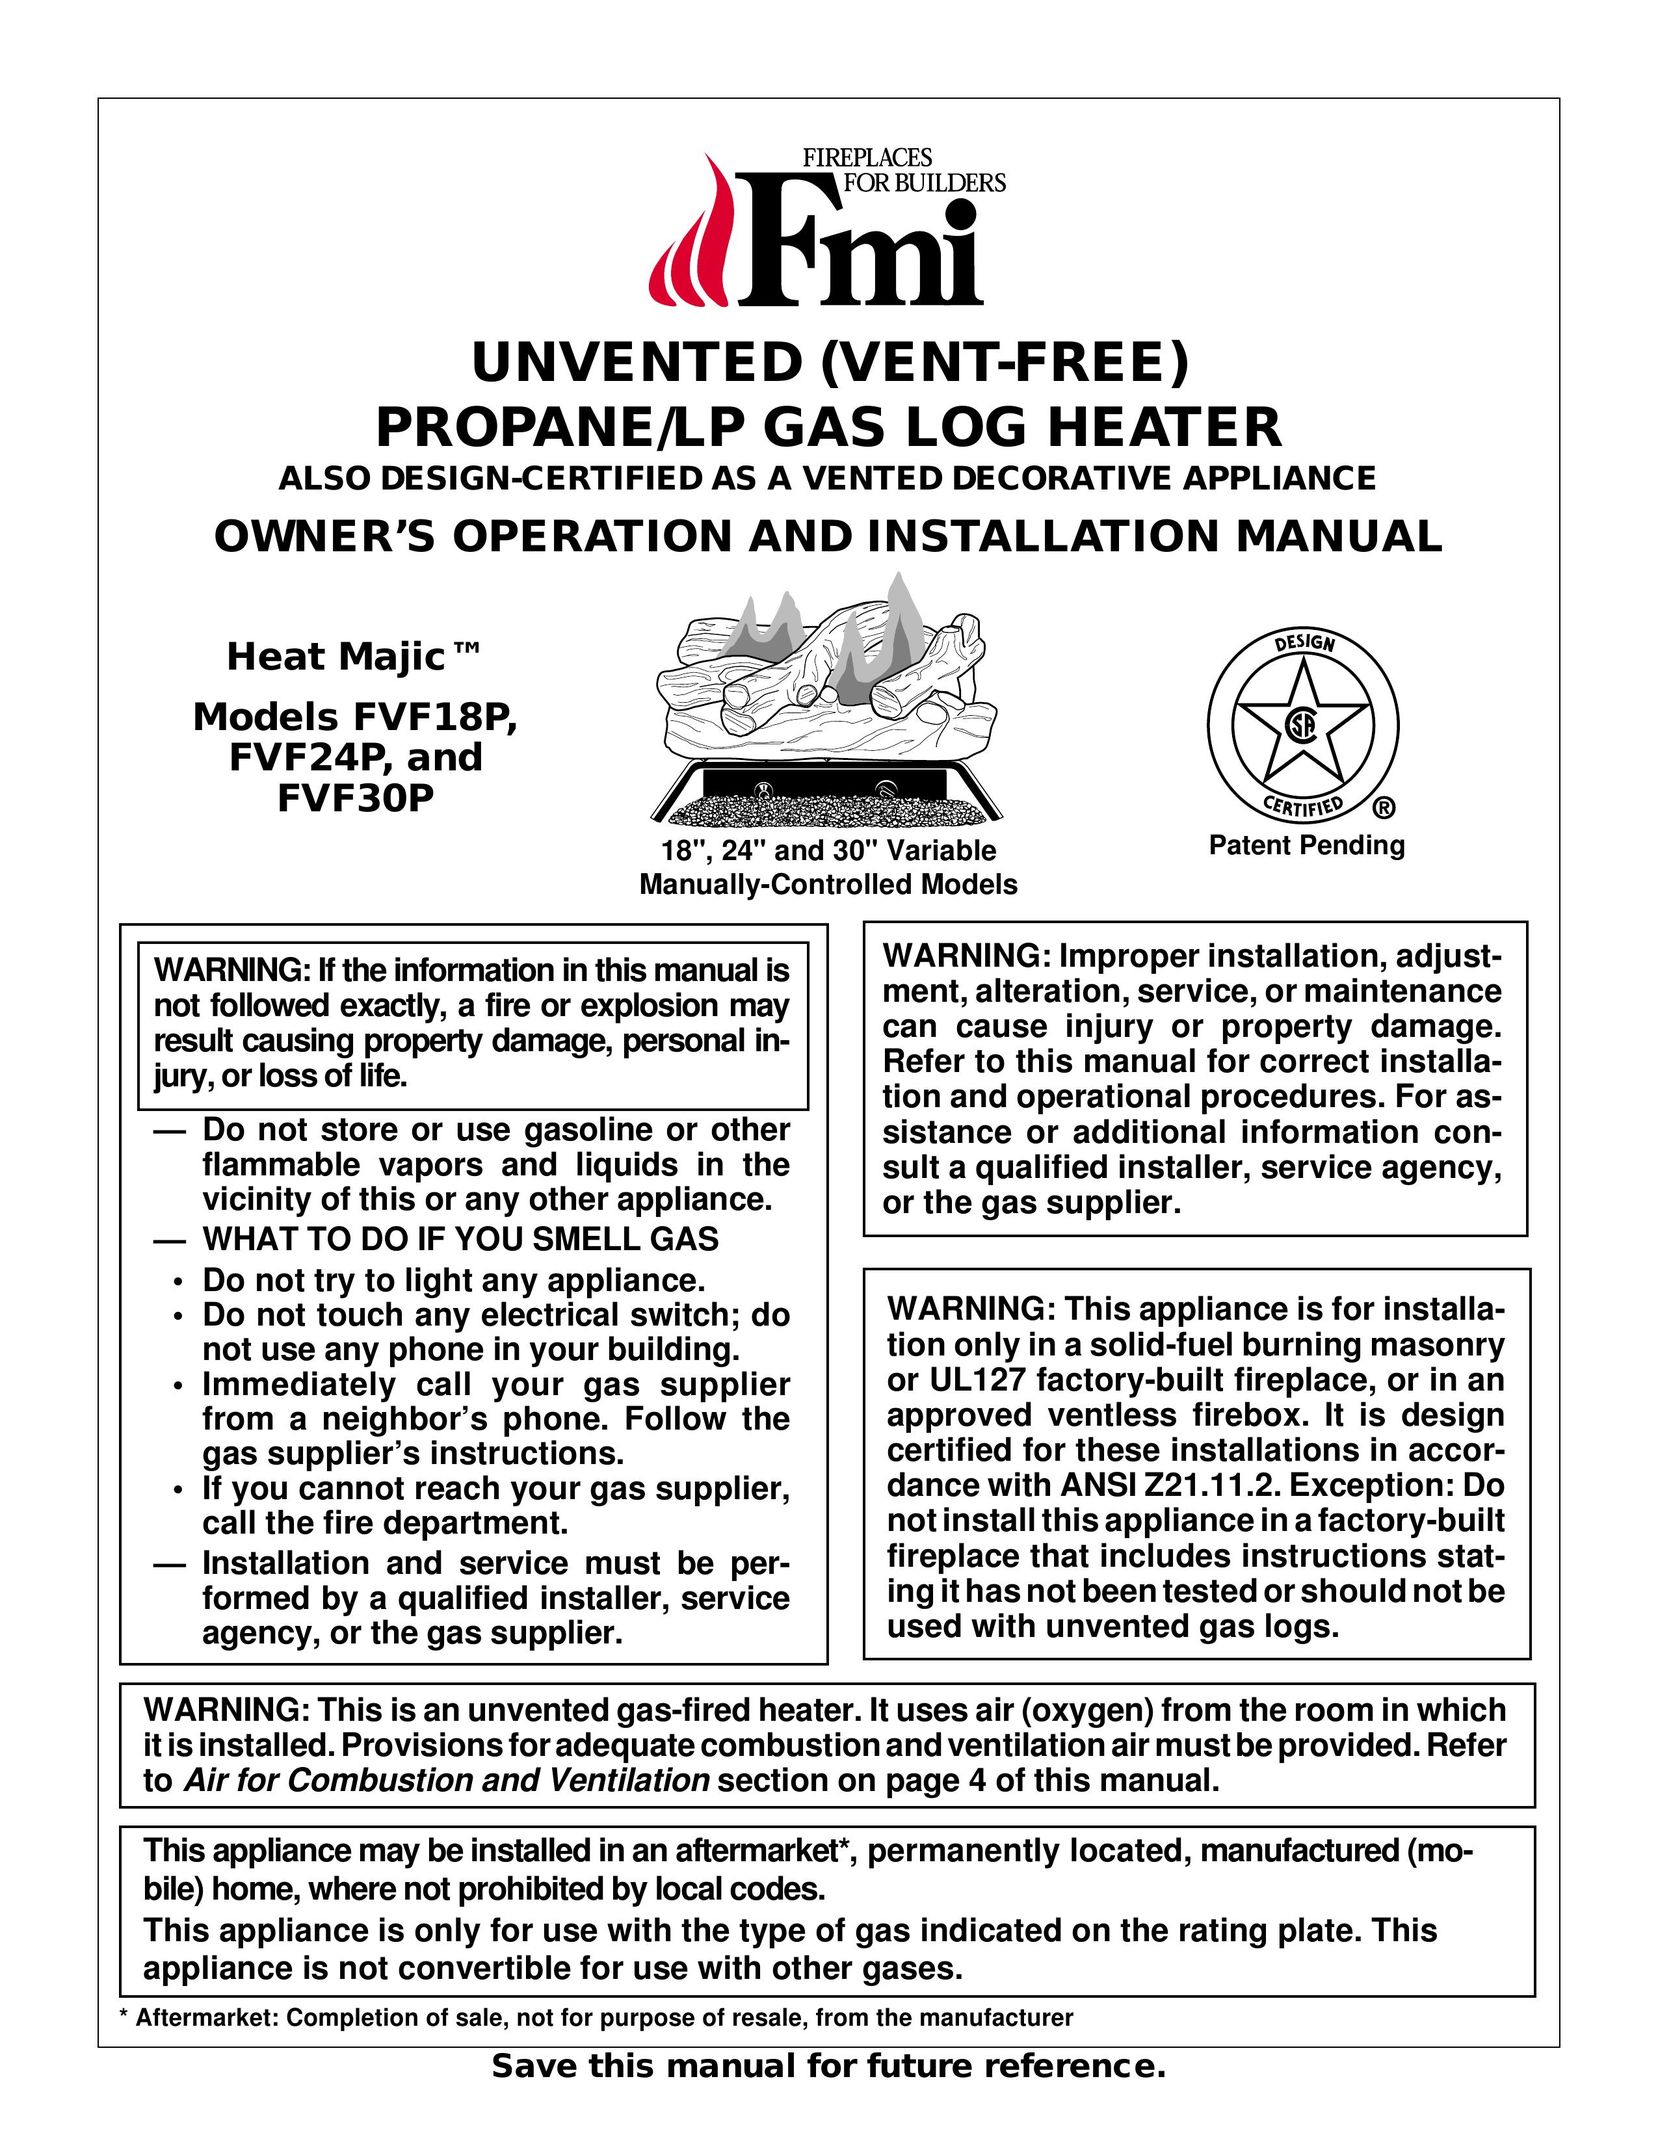 FMI FVF18P Gas Heater User Manual